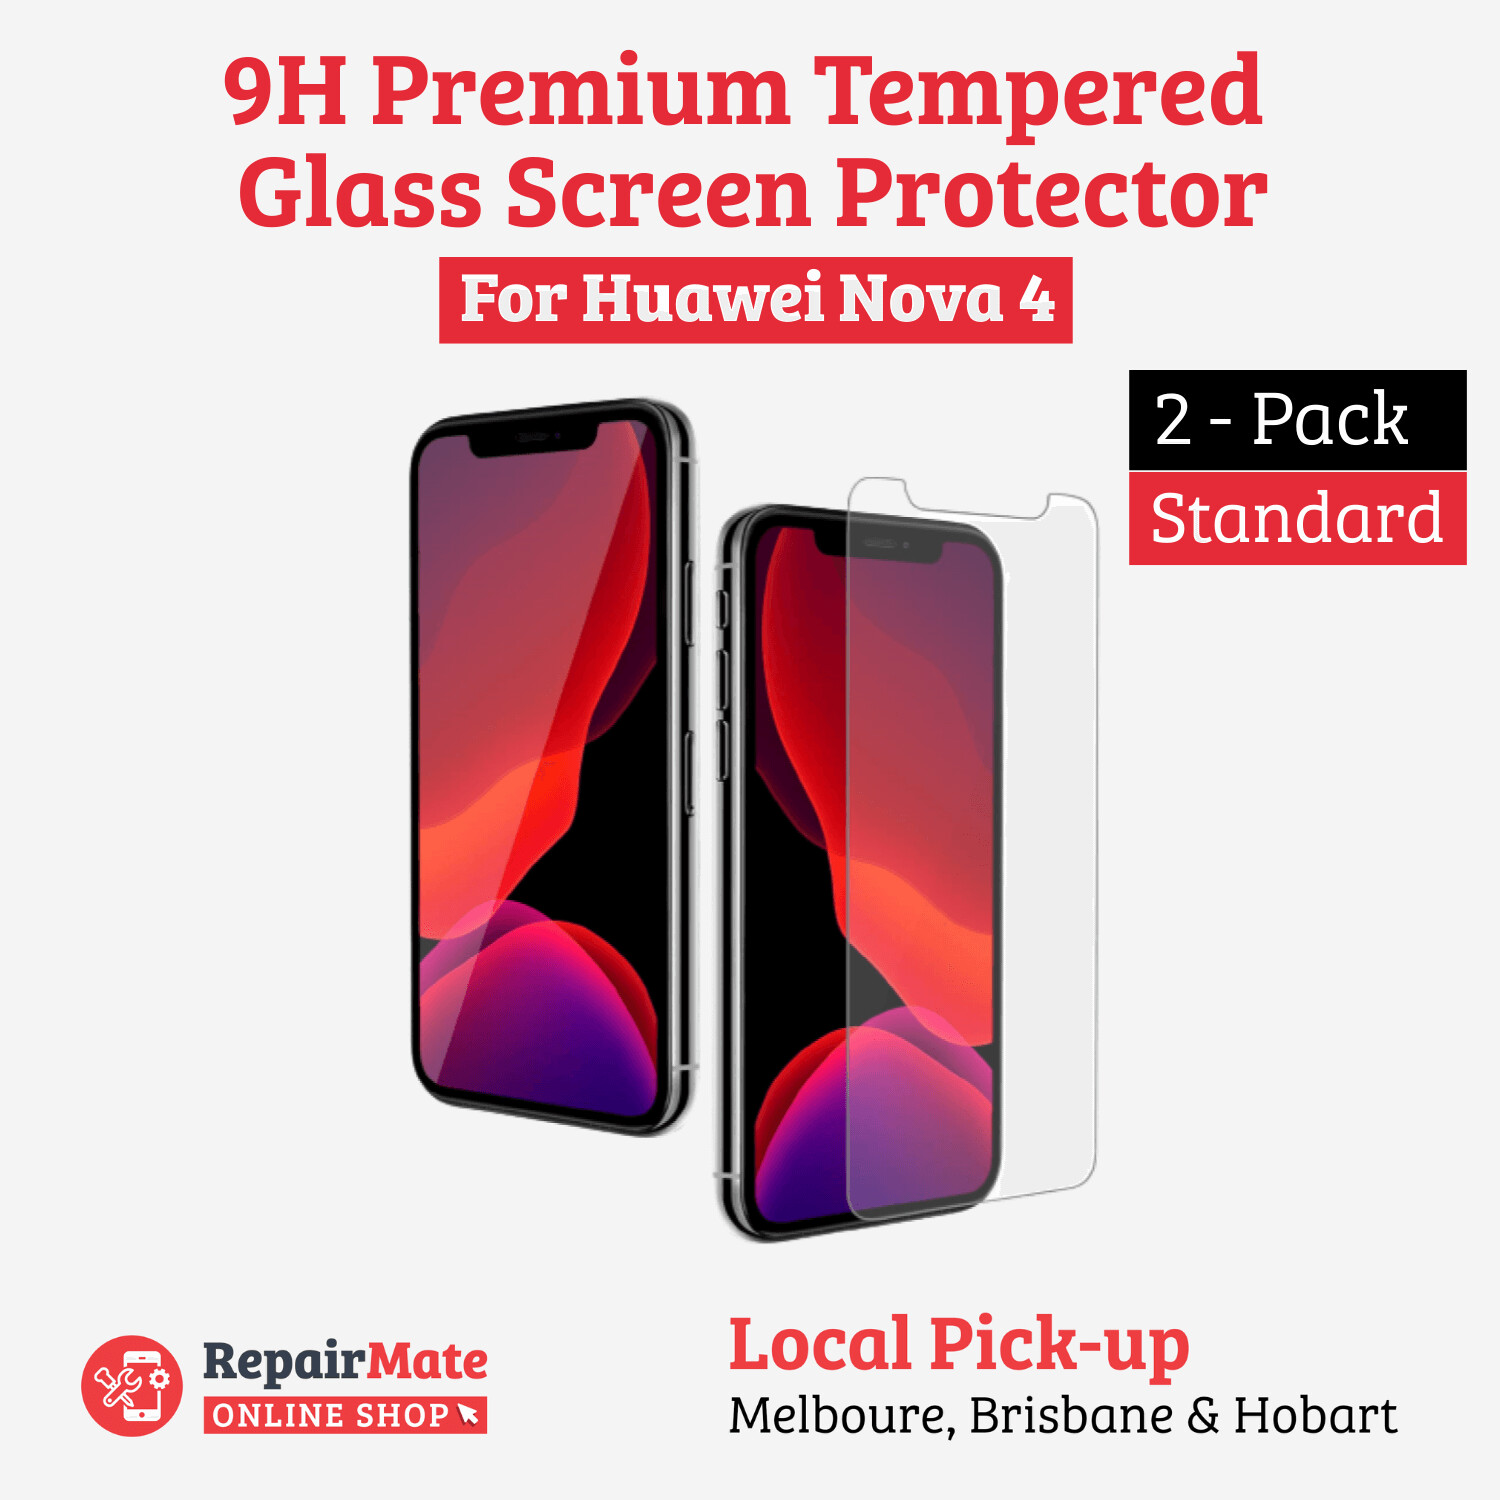 Huawei Nova 4 9H Premium Tempered Glass Screen Protector [2 Pack]